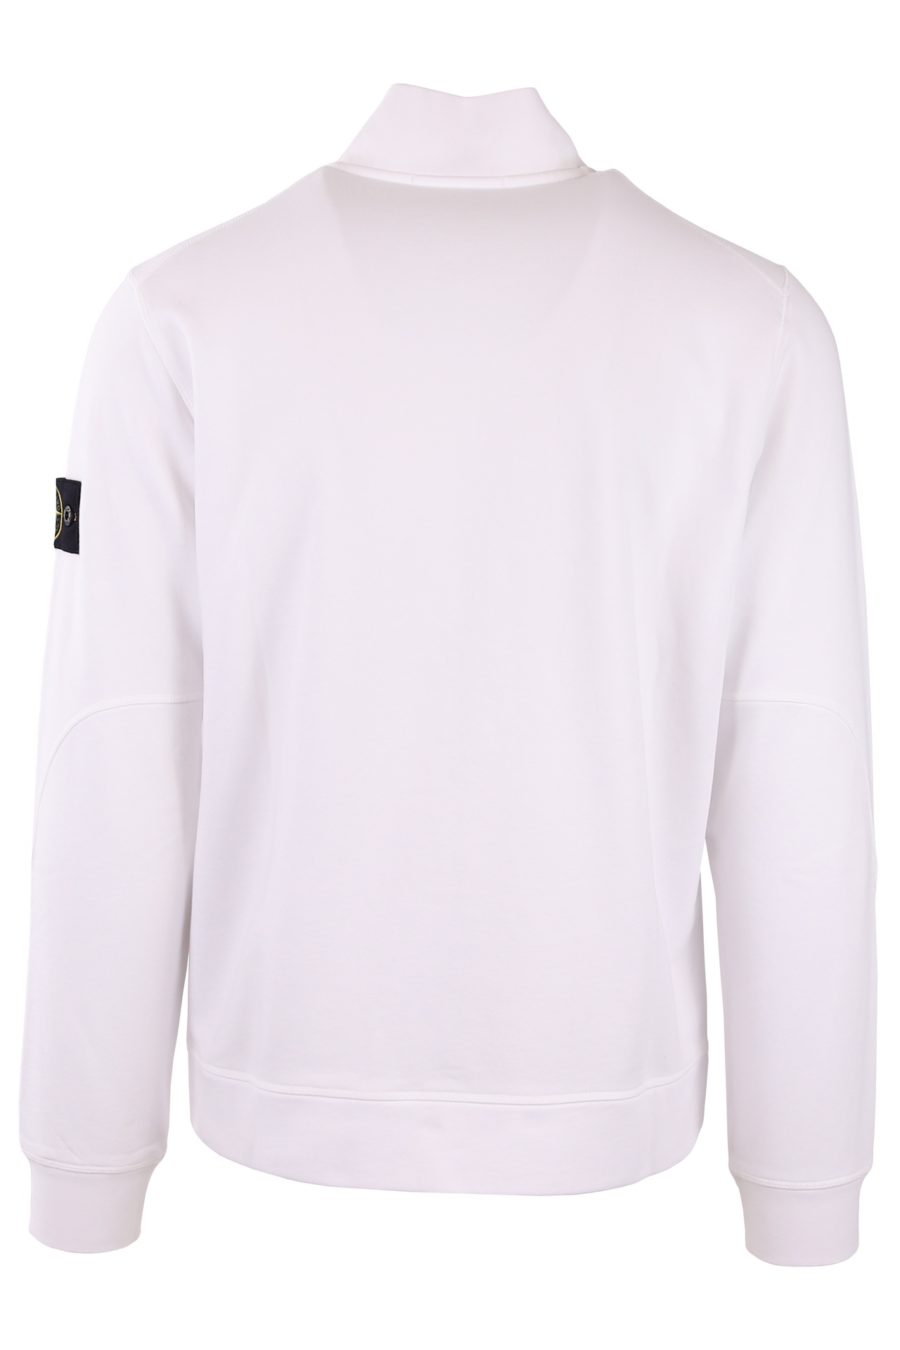 Stone Island white zip-up sweatshirt - 2f5829b79b54a1c02d2d30f97cee62045df71cfb